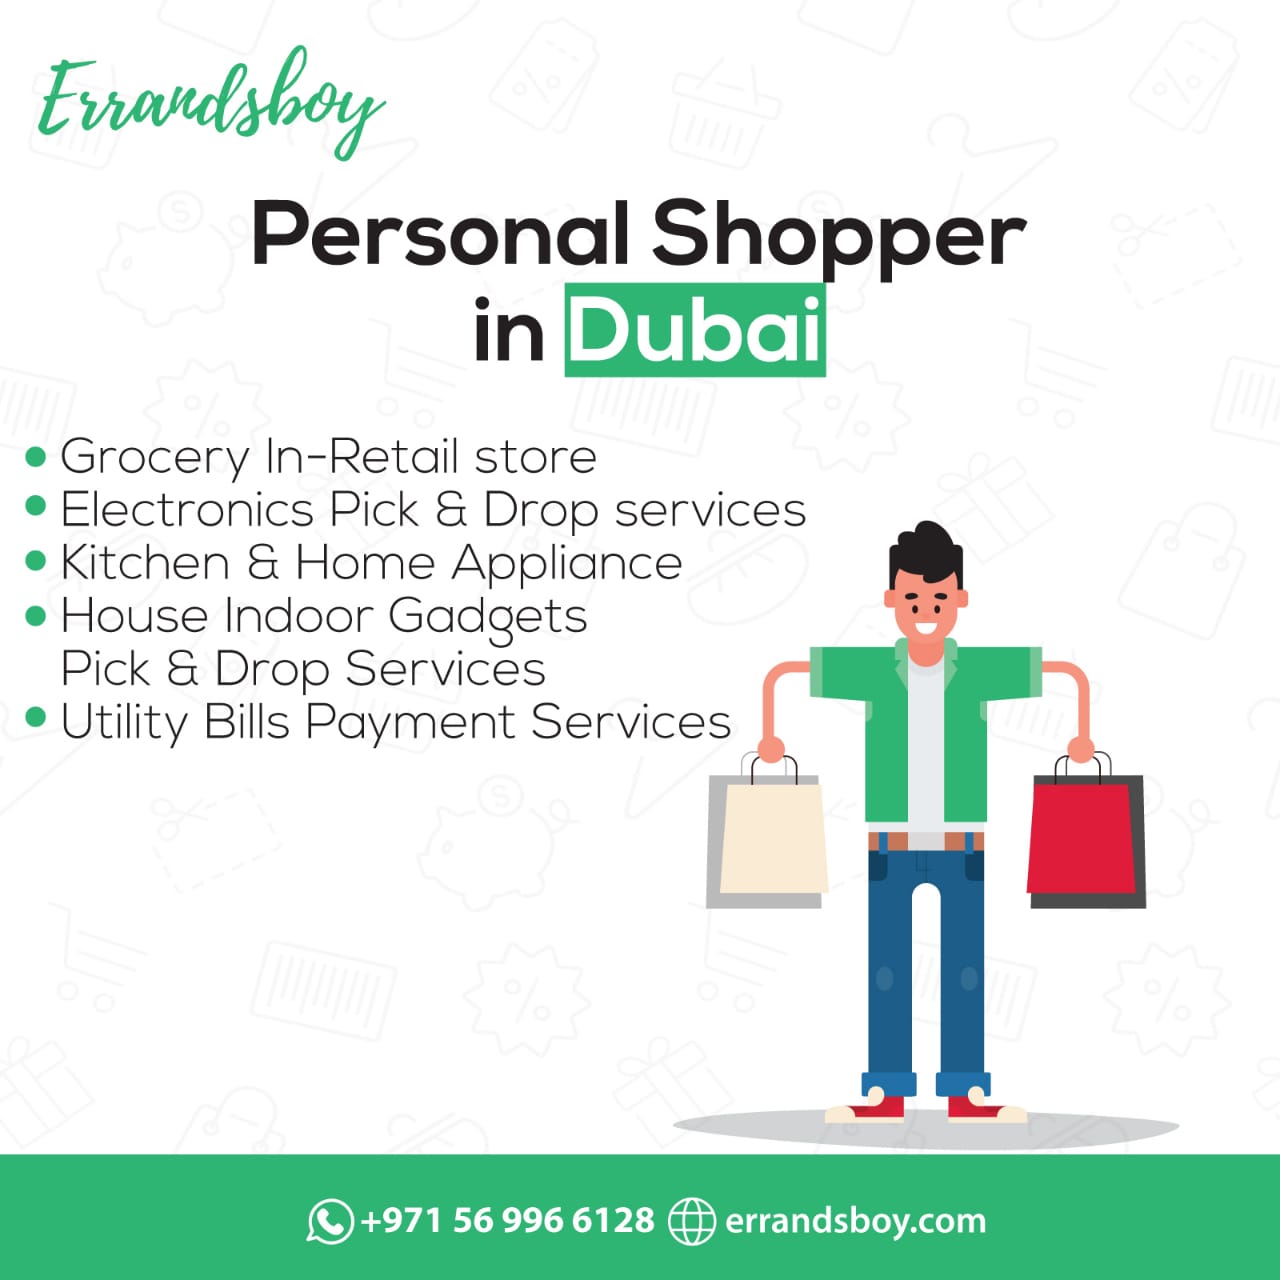 How do Personal Shopper Work?